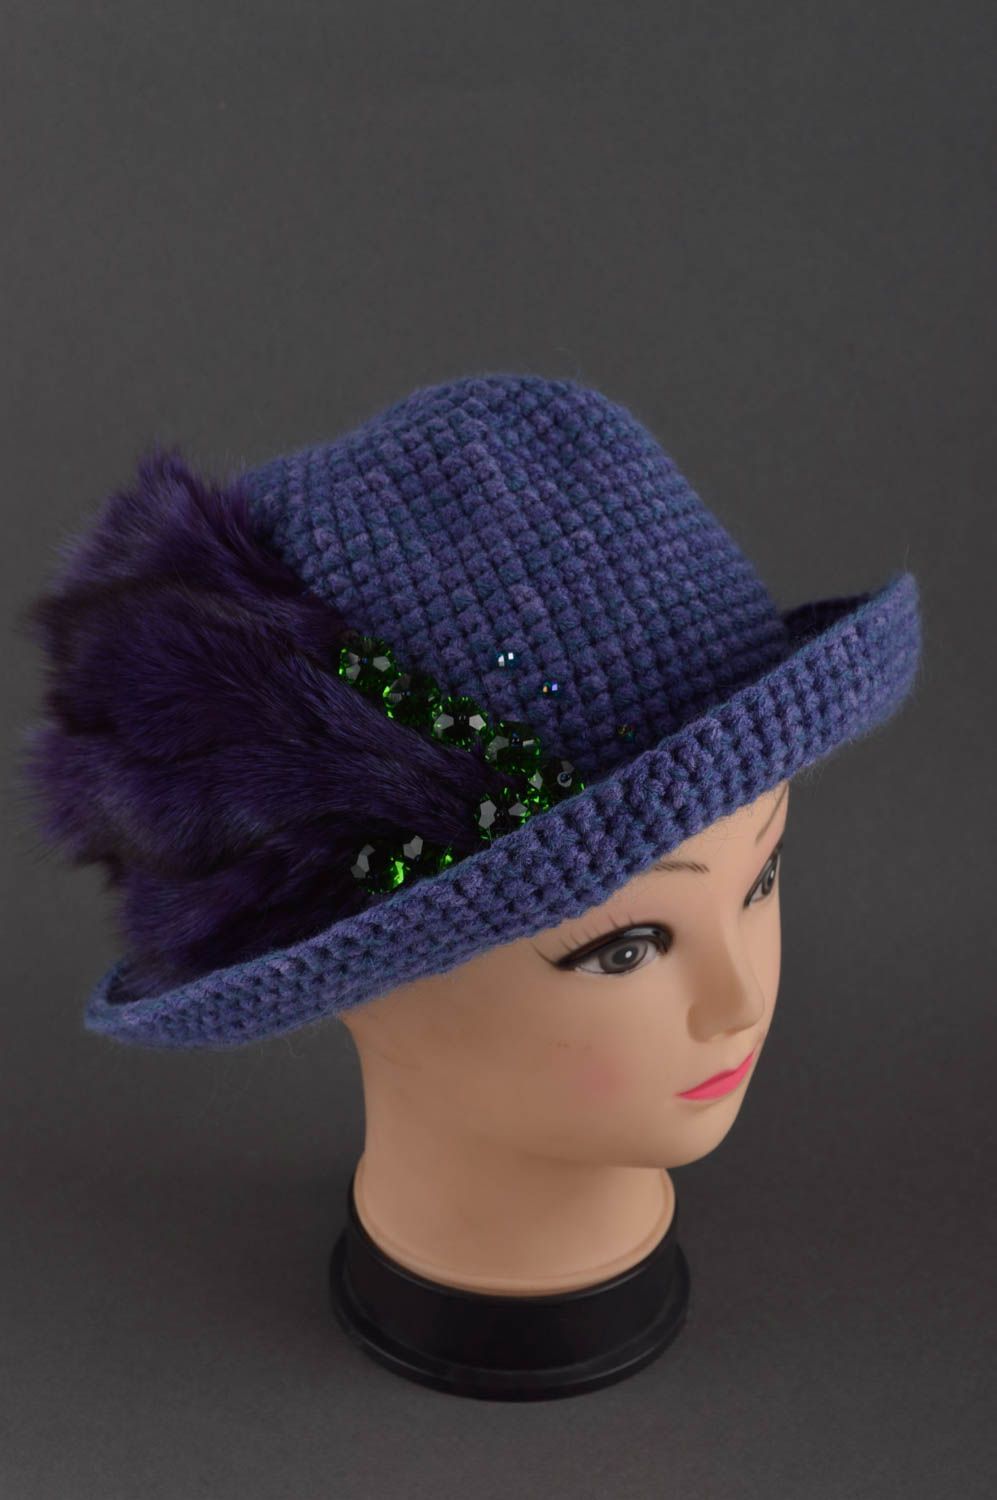 Handmade designer hat ladies hat crochet hat fashion accessories gifts for women photo 1